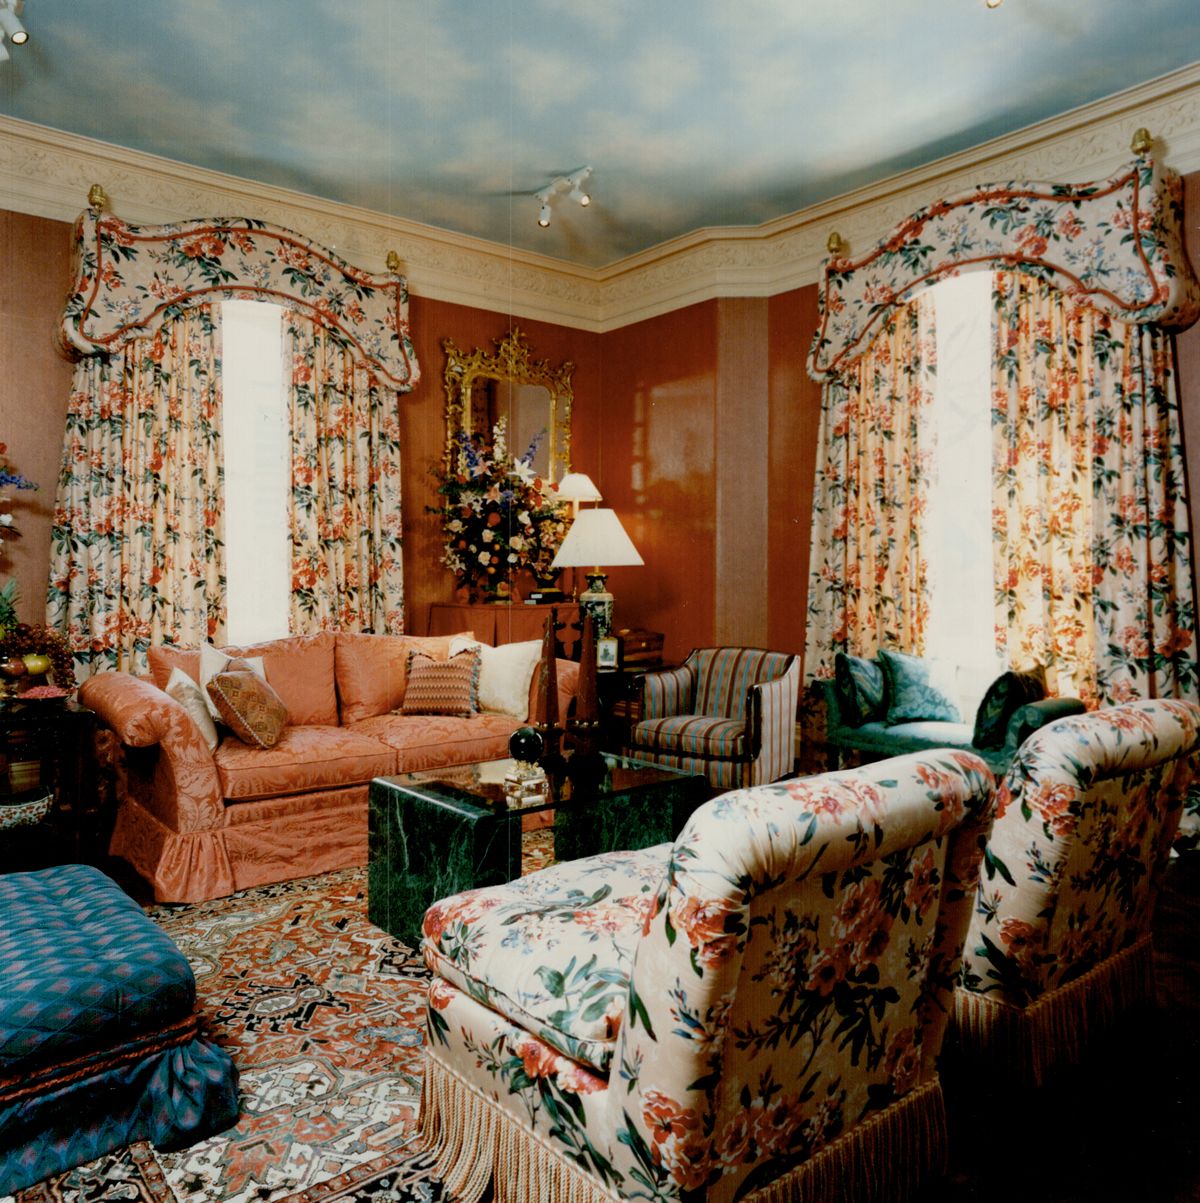 Brown's bedroom: A sitting room designed by Edward Welker interiors Ltd. Was orginally George Brown'